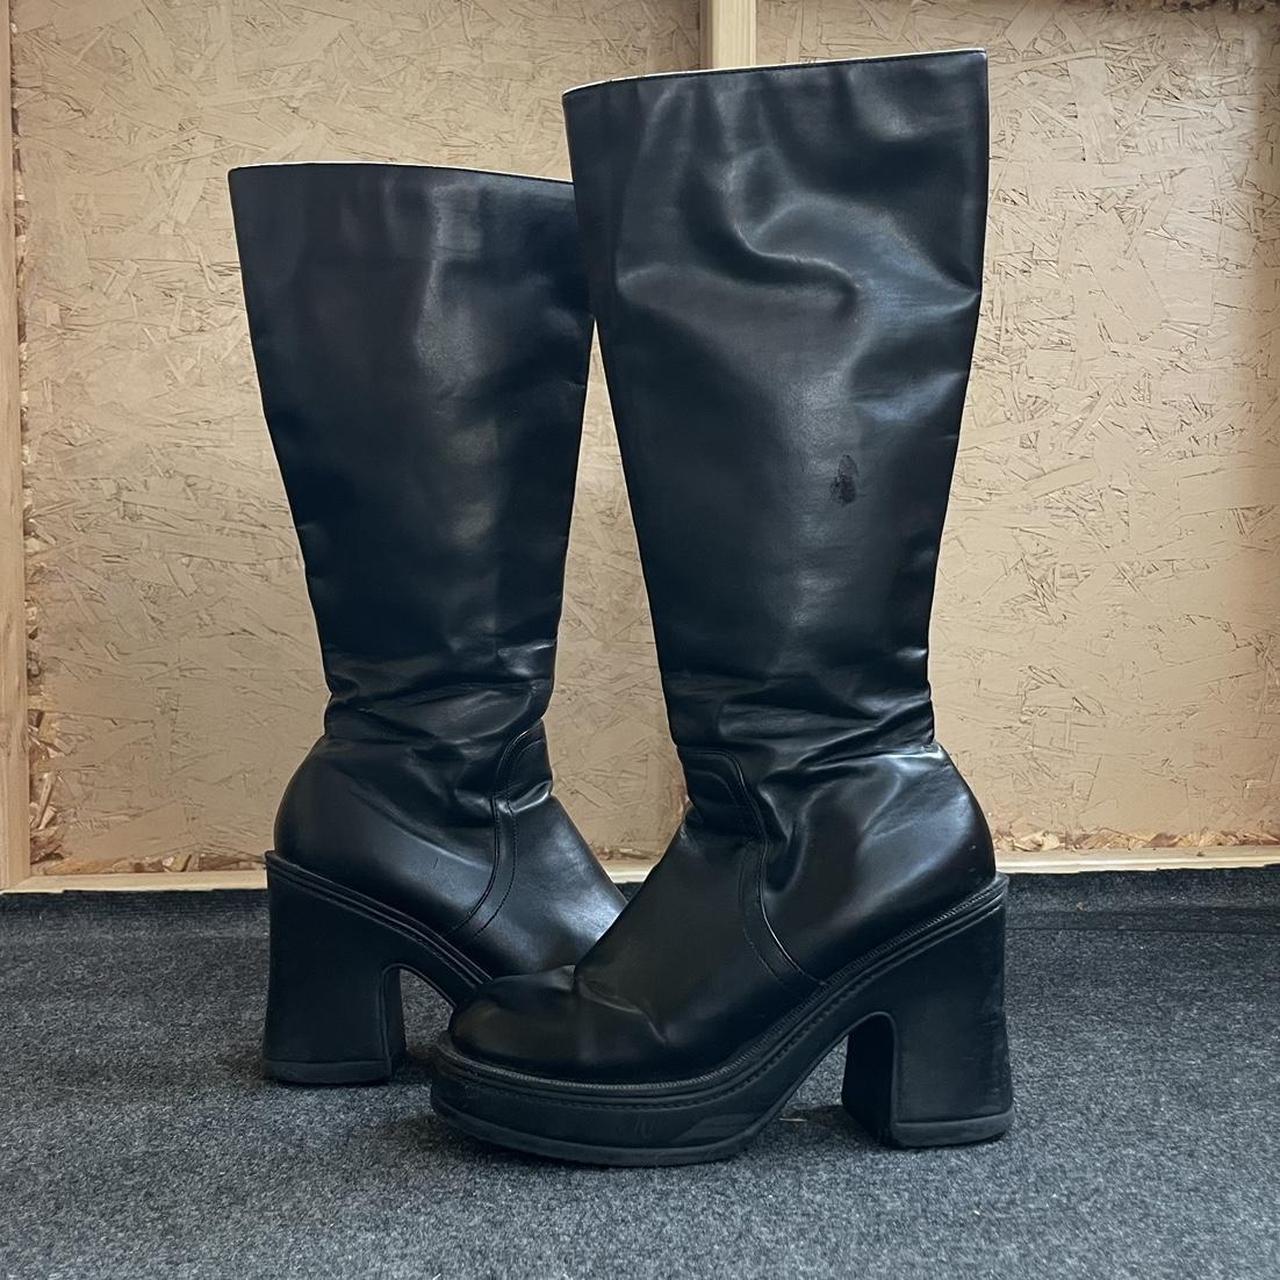 Candie's Women's Black Boots | Depop